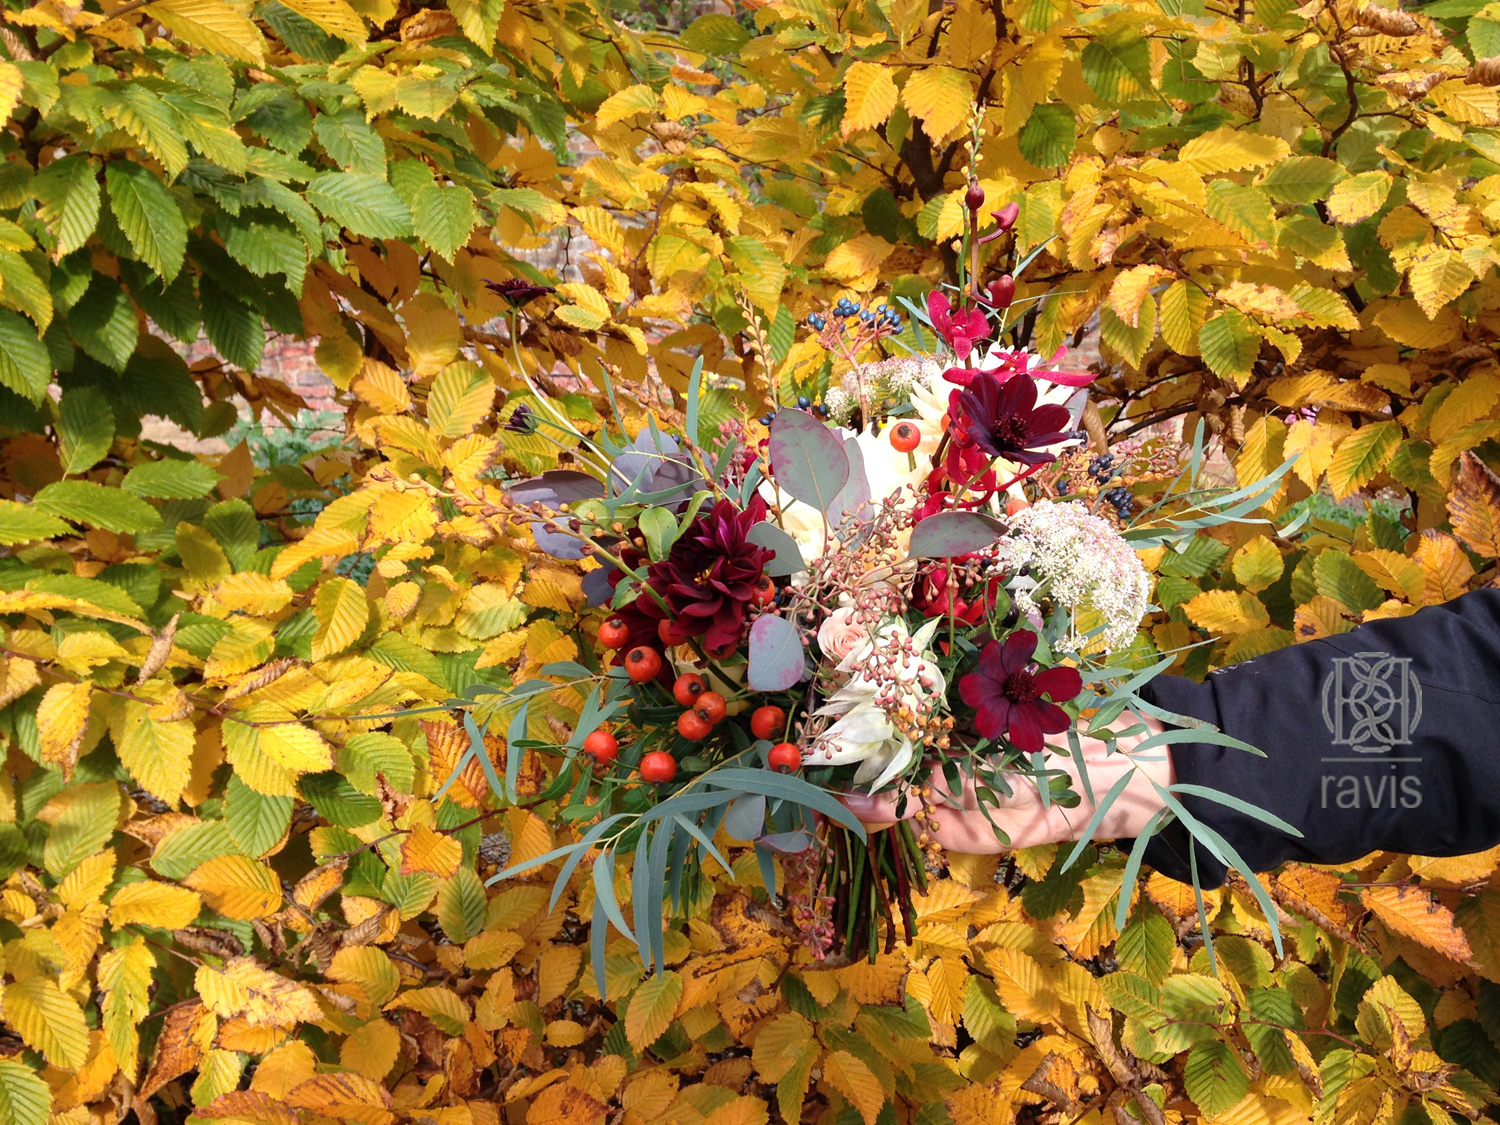 دسته گل عروس پاییزی| عروس| آرایش عروس| دسته گل|دسته گل عروس